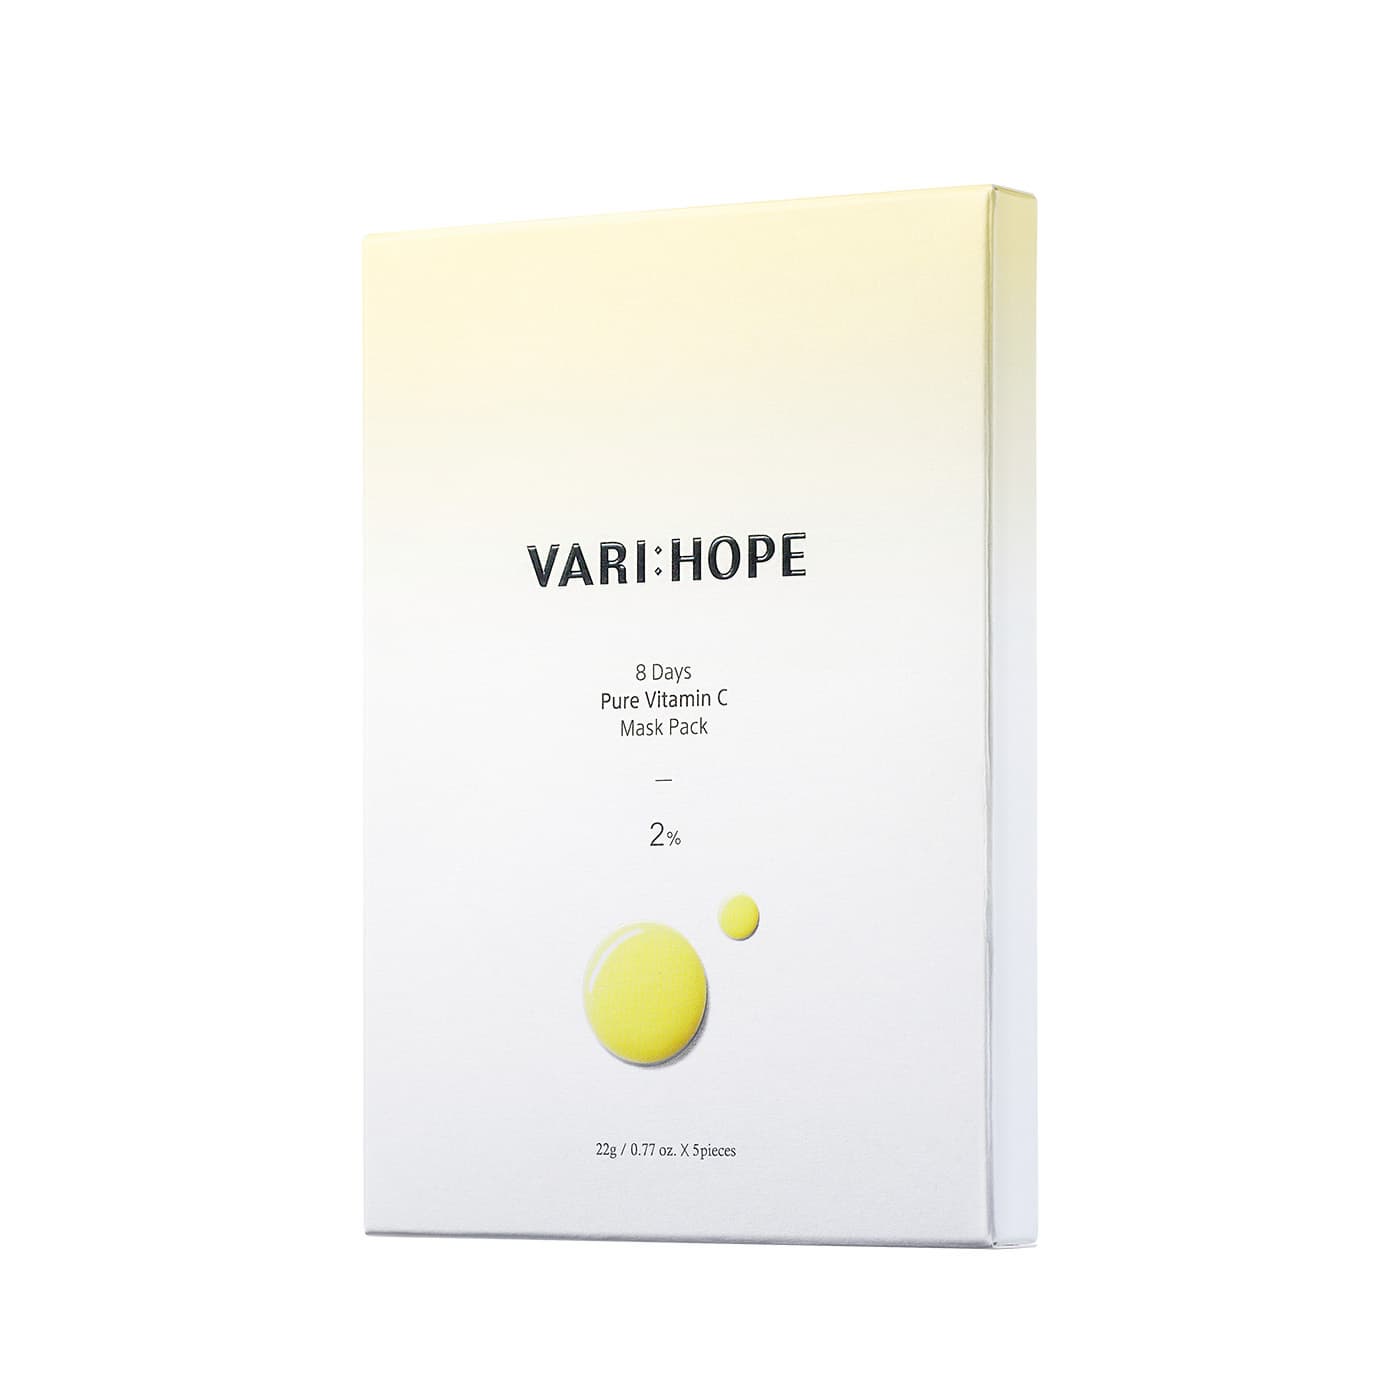 VARIHOPE 8 Days Pure Vitamin C Mask Pack